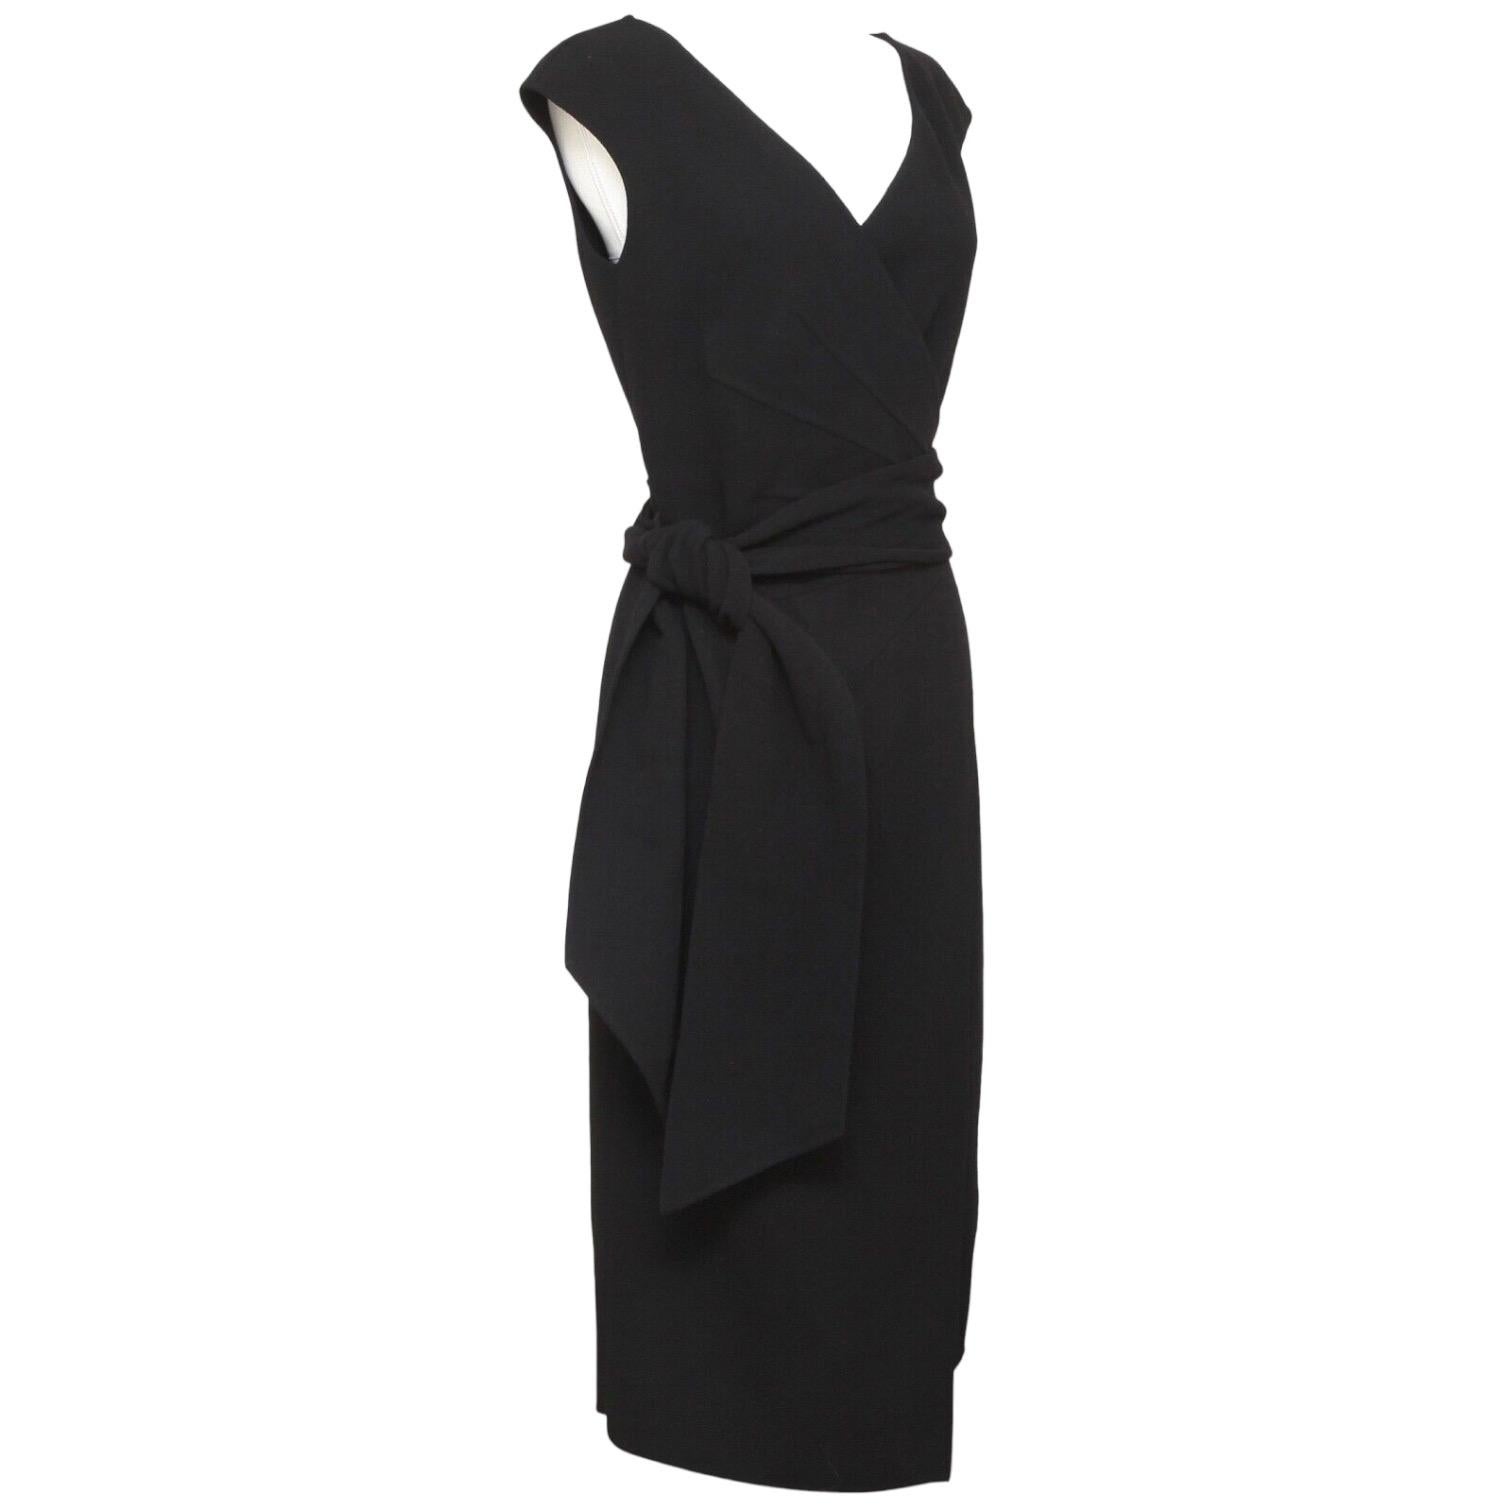 OSCAR DE LA RENTA Dress Black Sleeveless Wrap Knit Sz 8 NWT $2190 In New Condition For Sale In Hollywood, FL